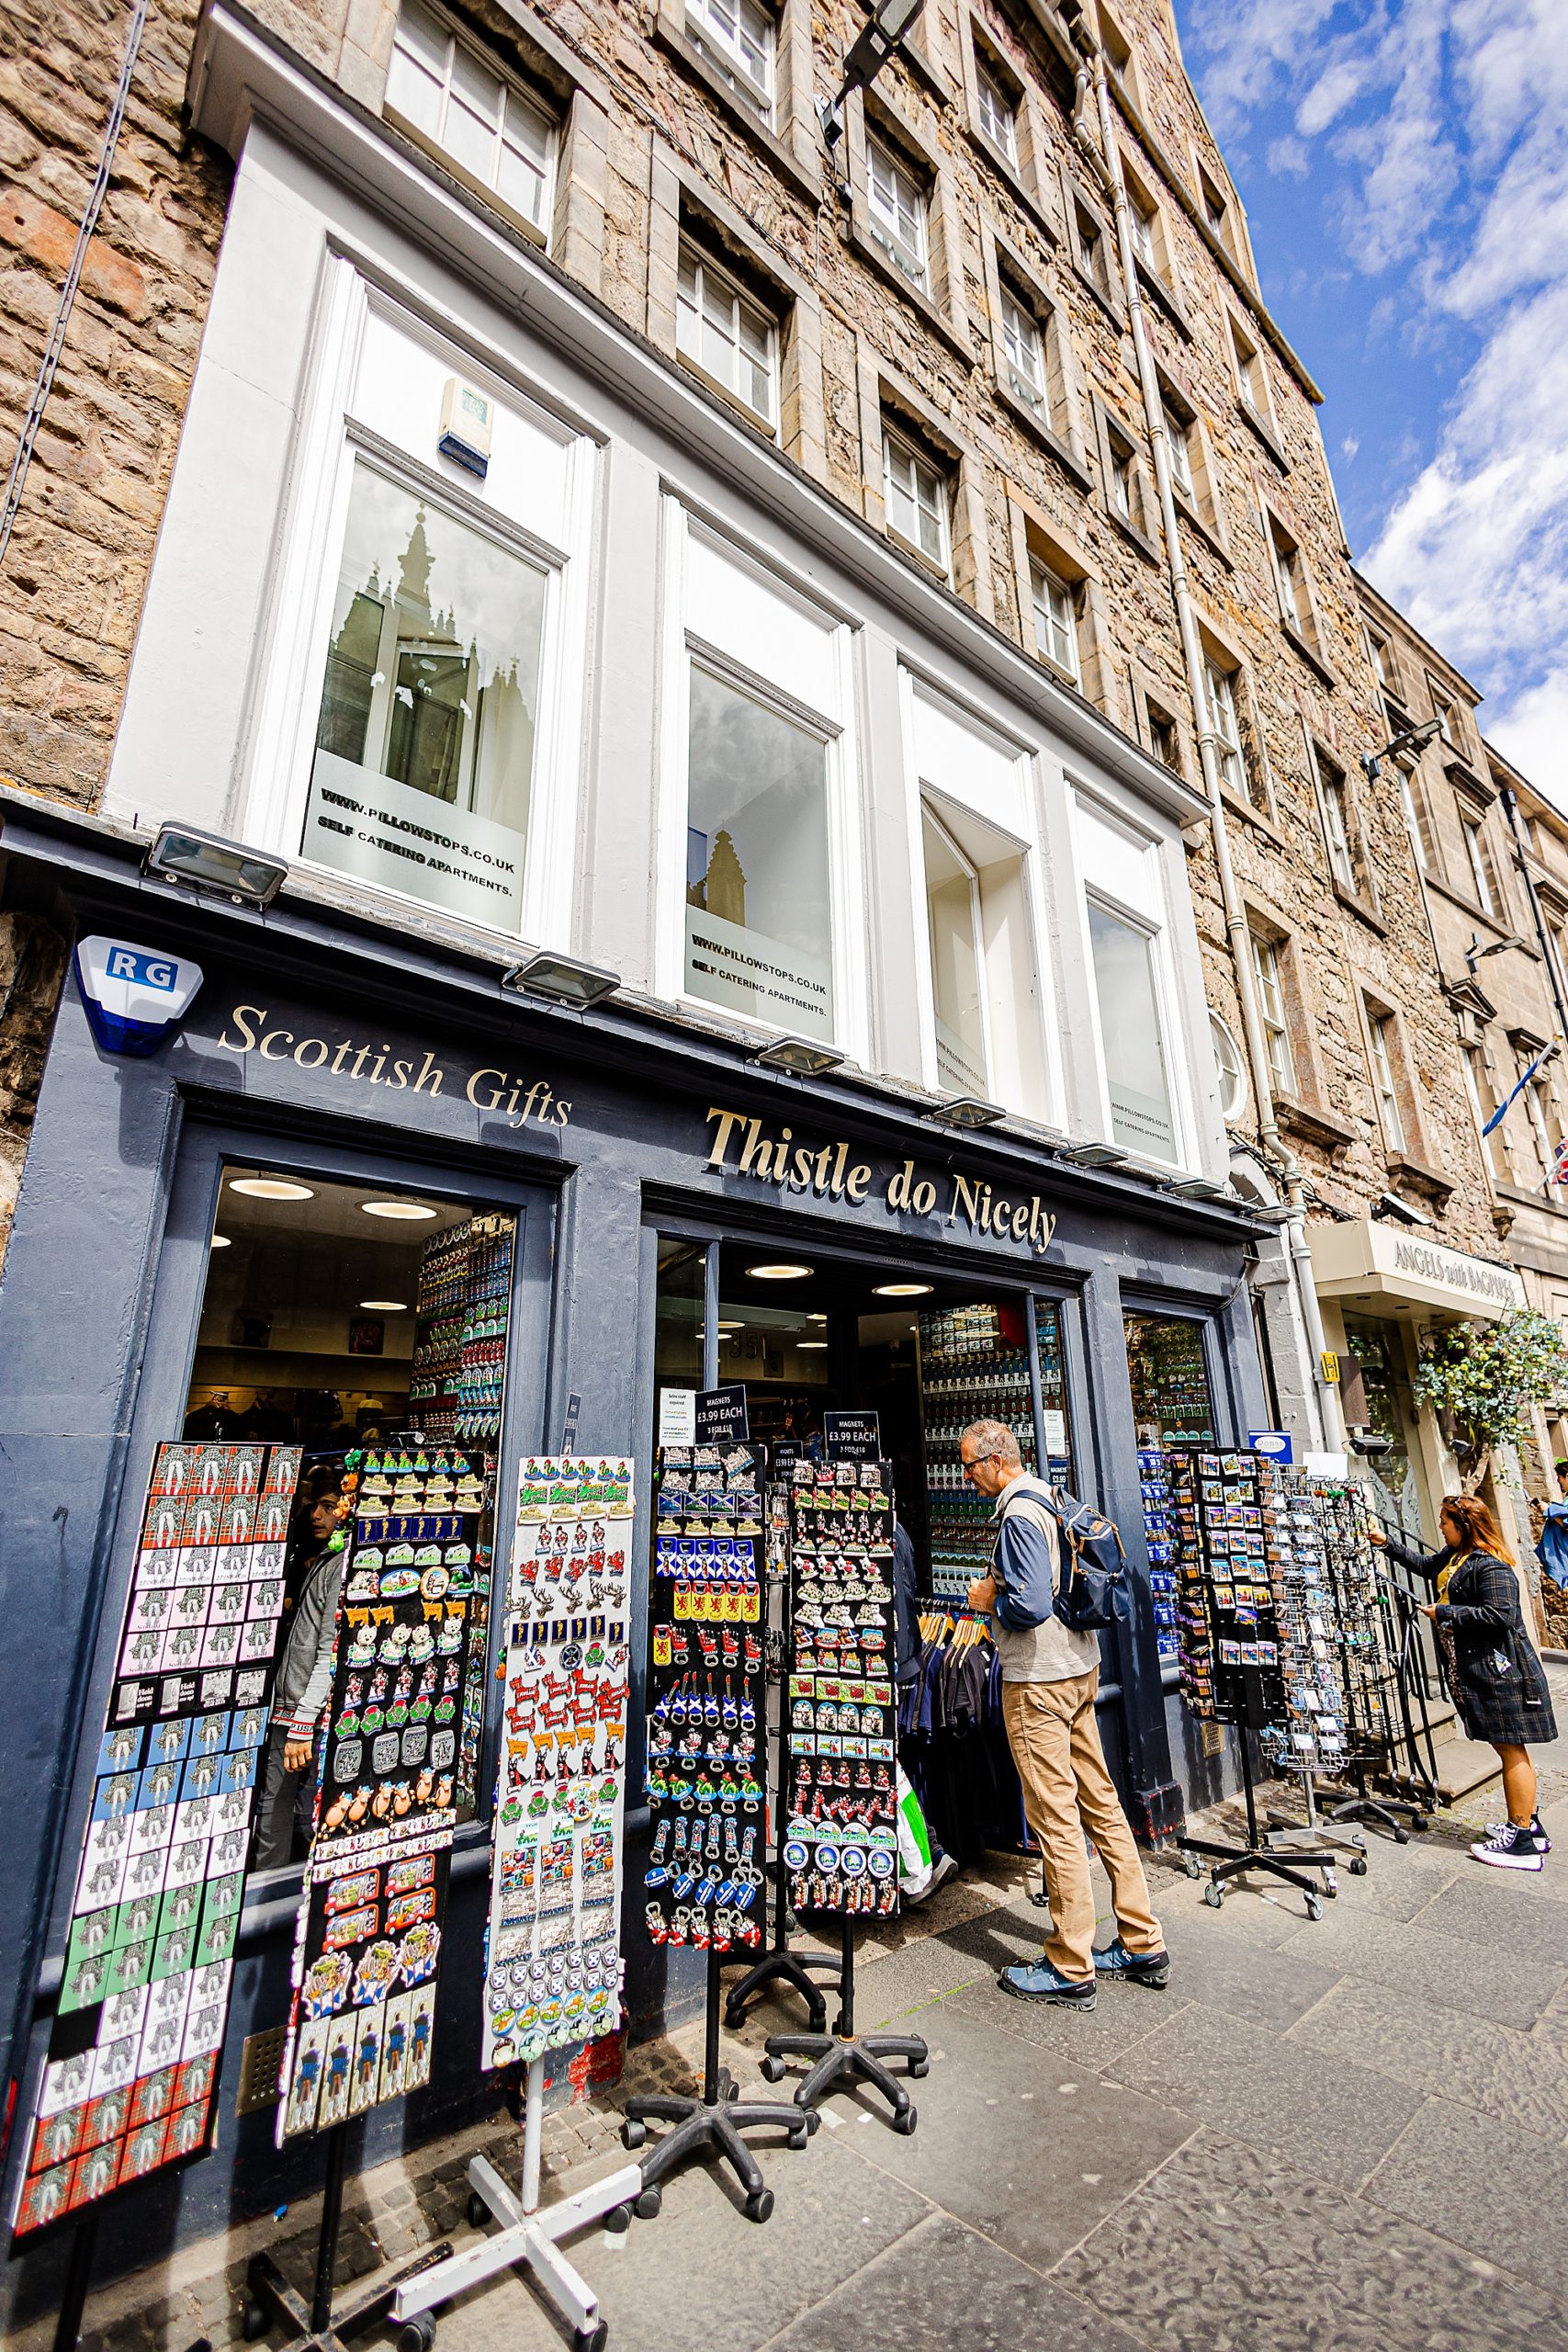 shops on street in Edinburgh Scotland